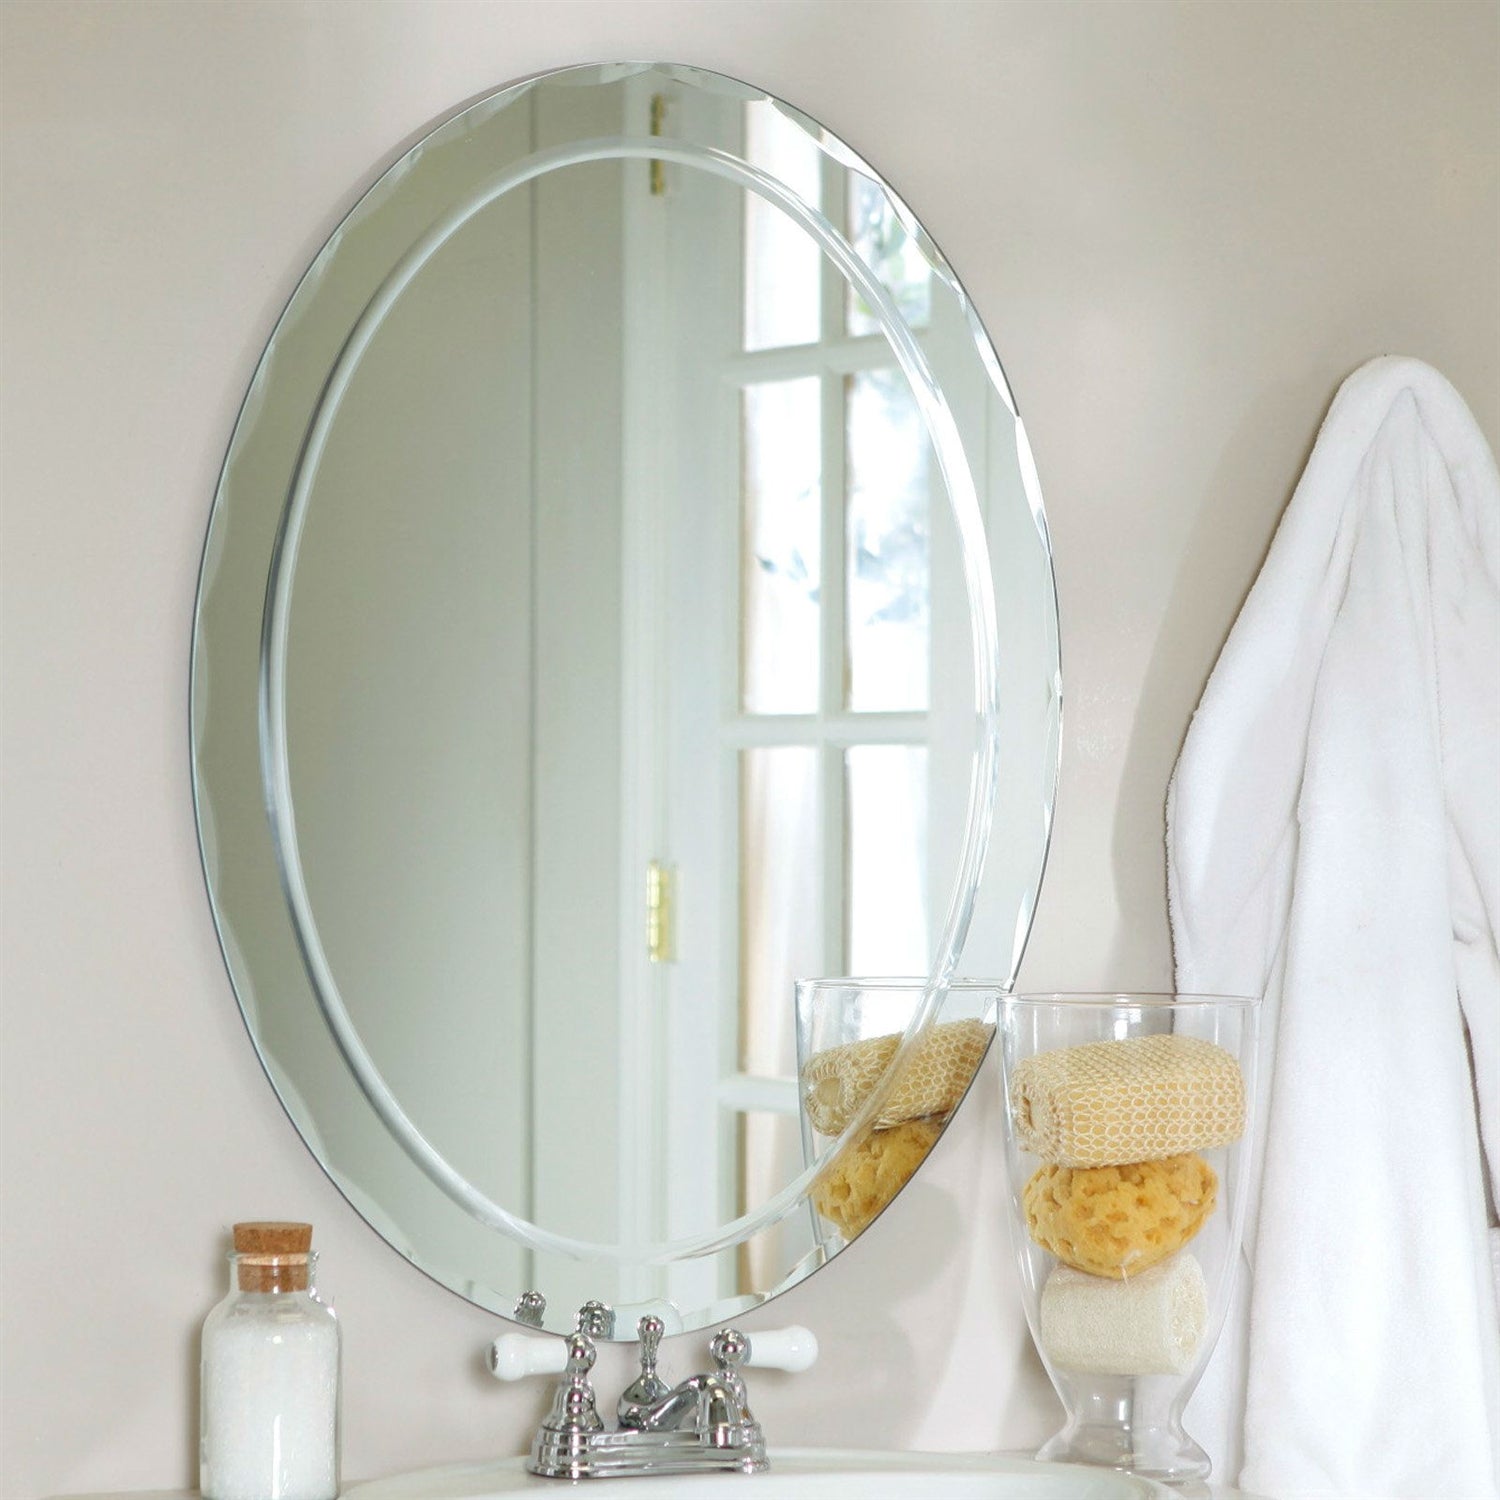 FastFurnishings Oval Frameless Bathroom Vanity Wall Mirror with Beveled Edge Scallop Border